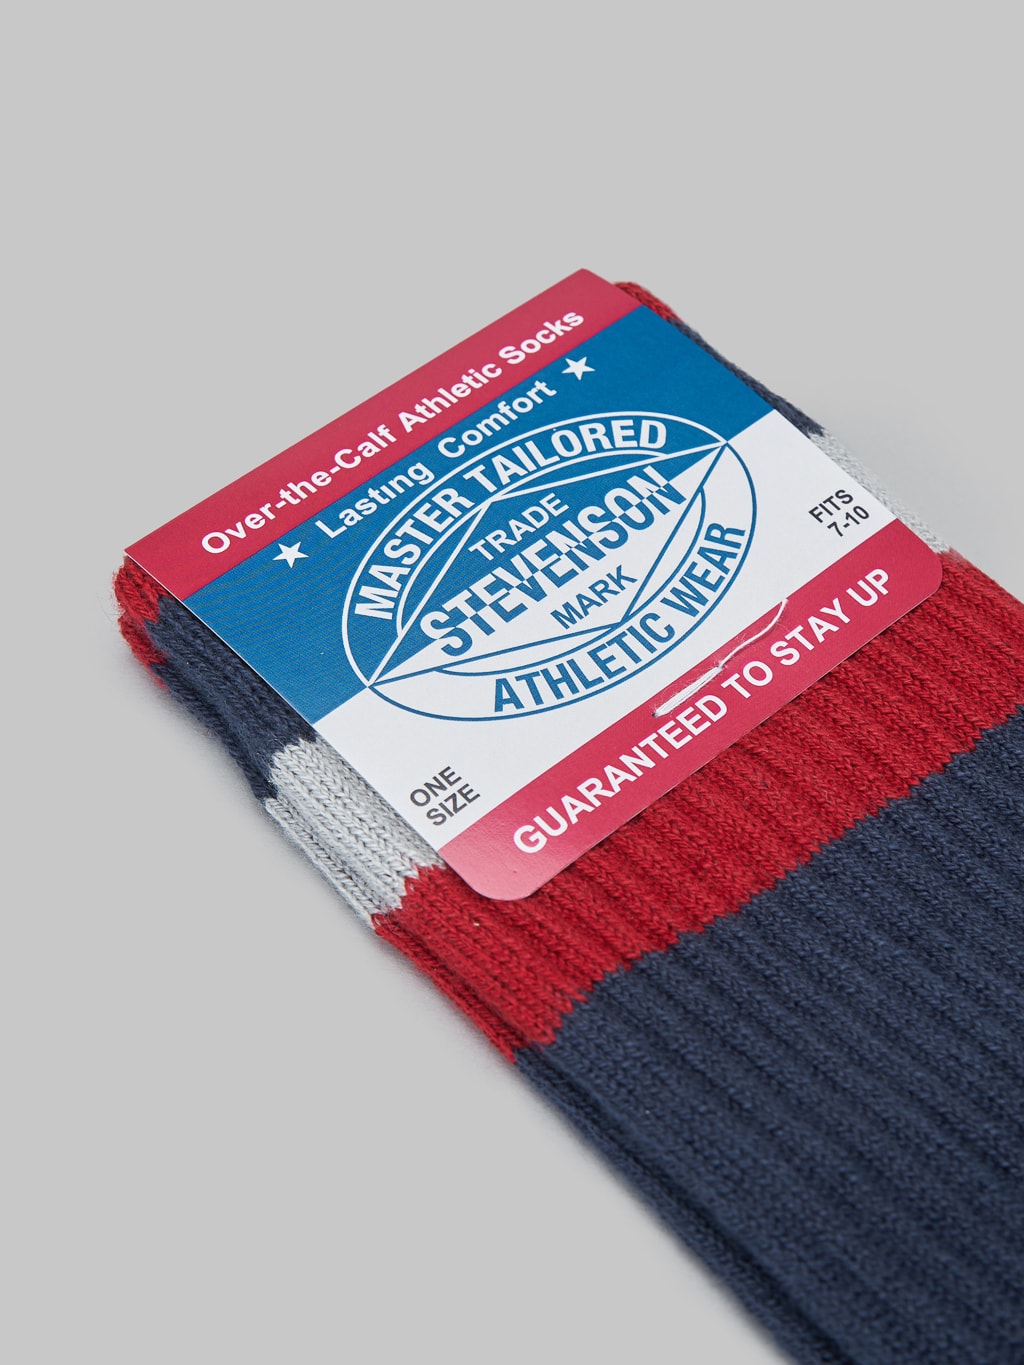 Stevenson Overall Athletic Socks navy brand tag